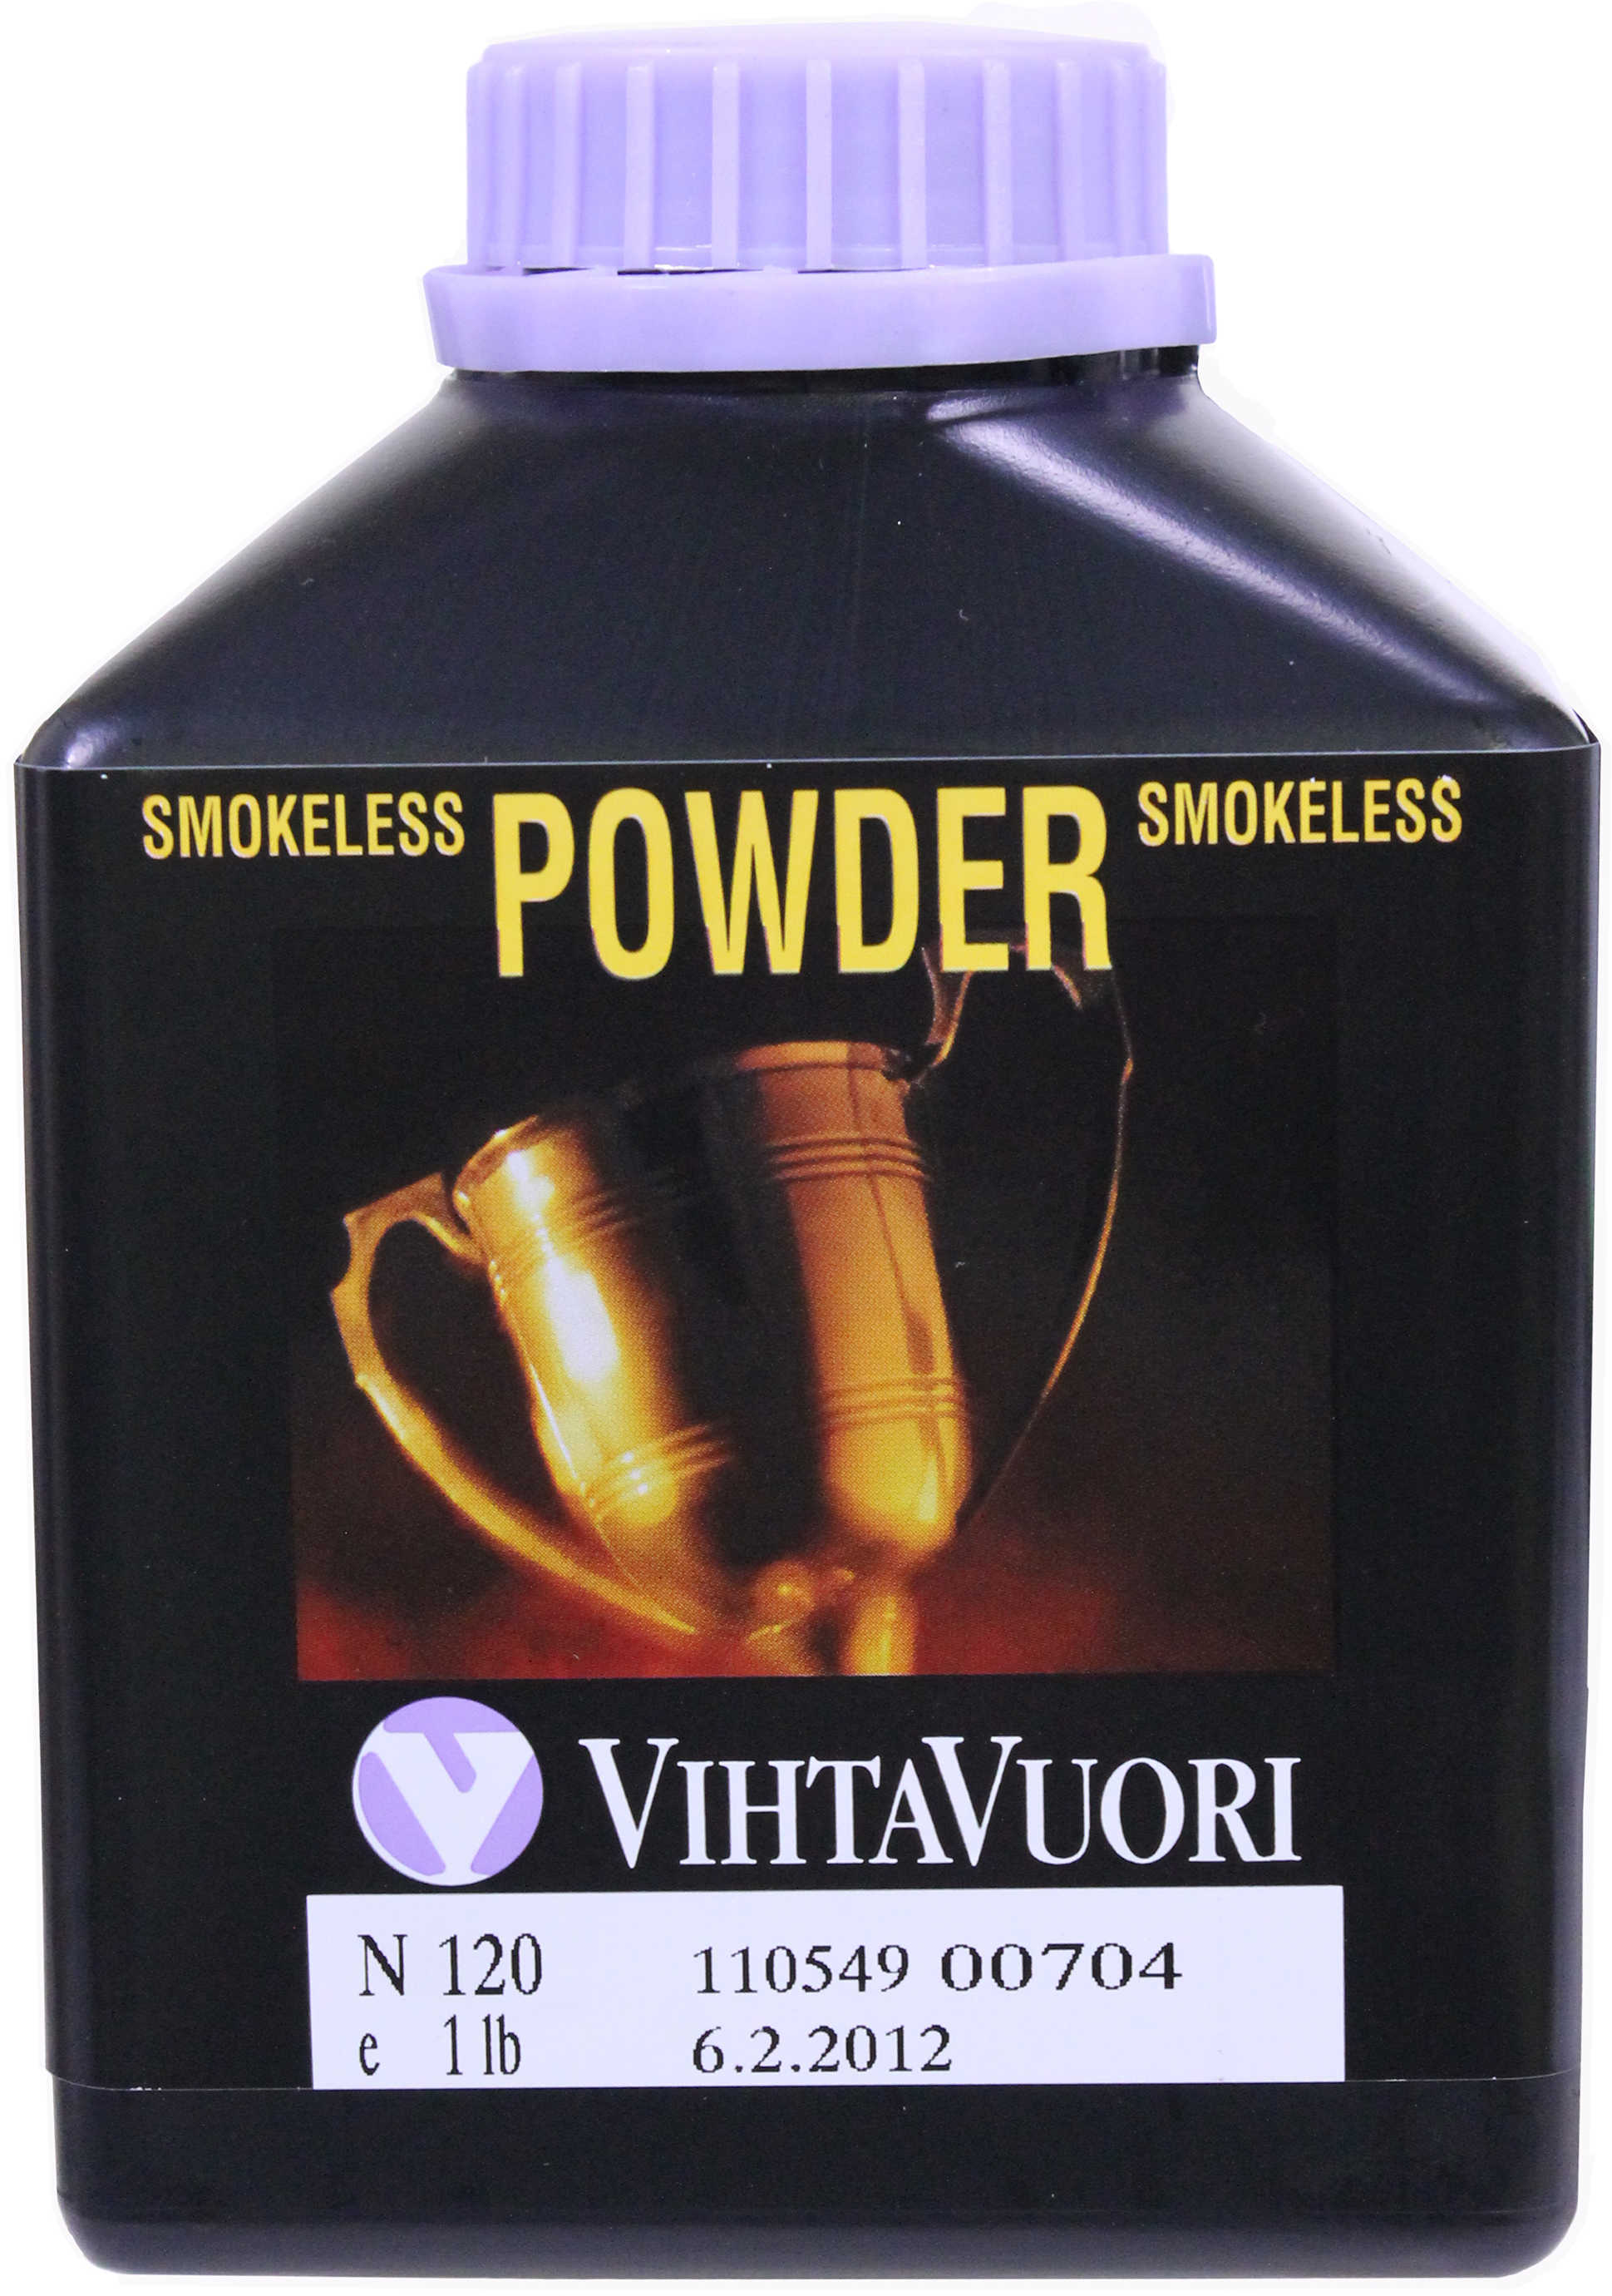 VihtaVouri N120 Smokeless Rifle Powder, 1 lb Container Md: N1201